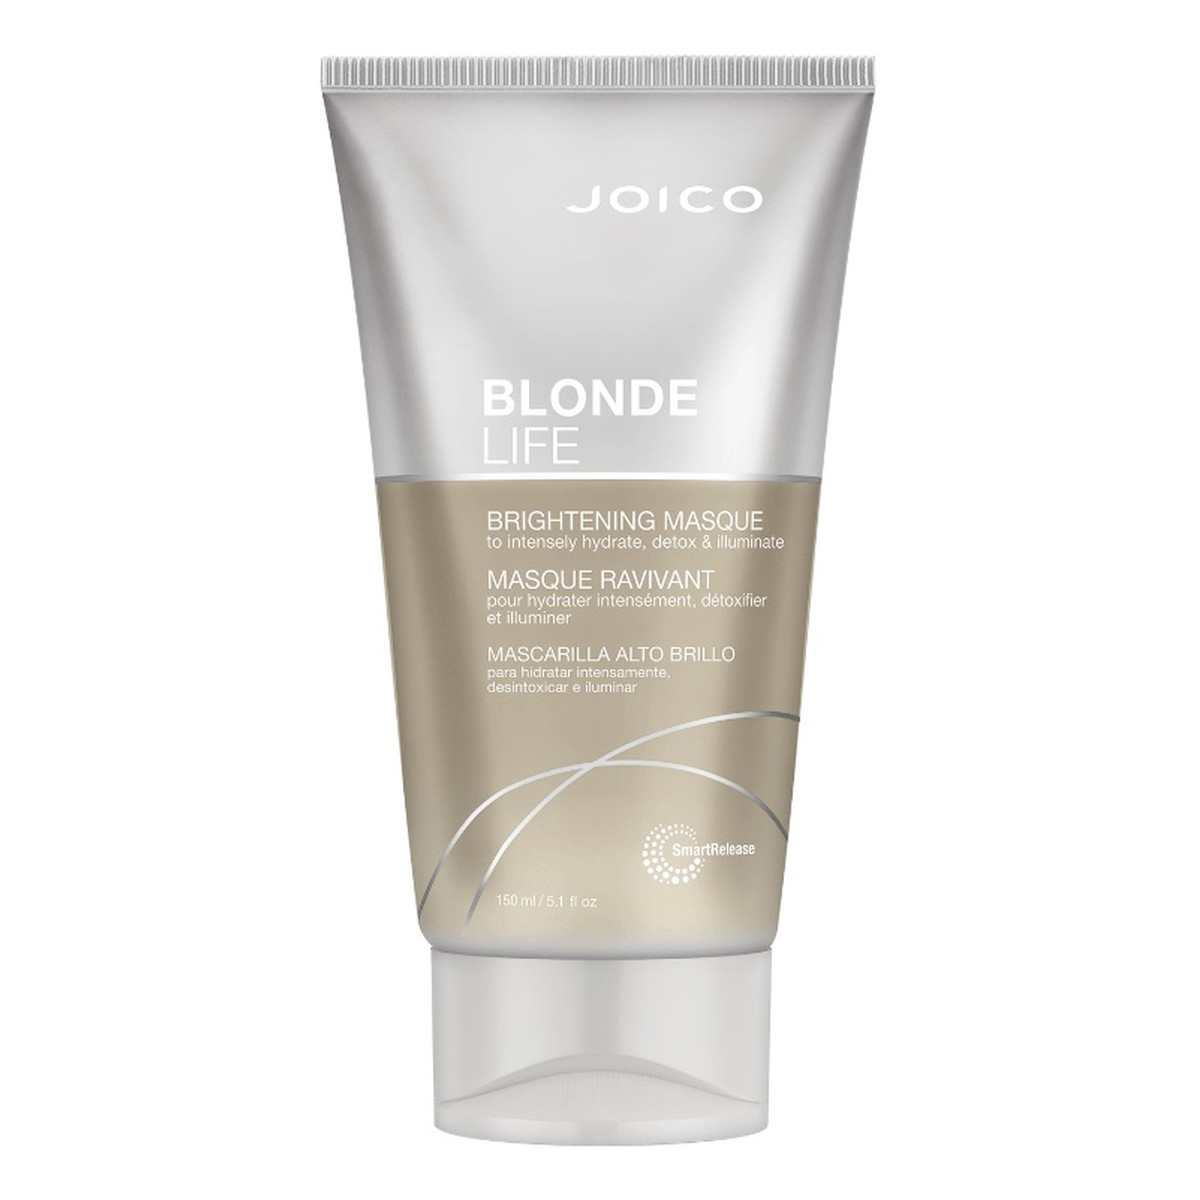 Joico Blonde life brightening masque maska do włosów blond 150ml